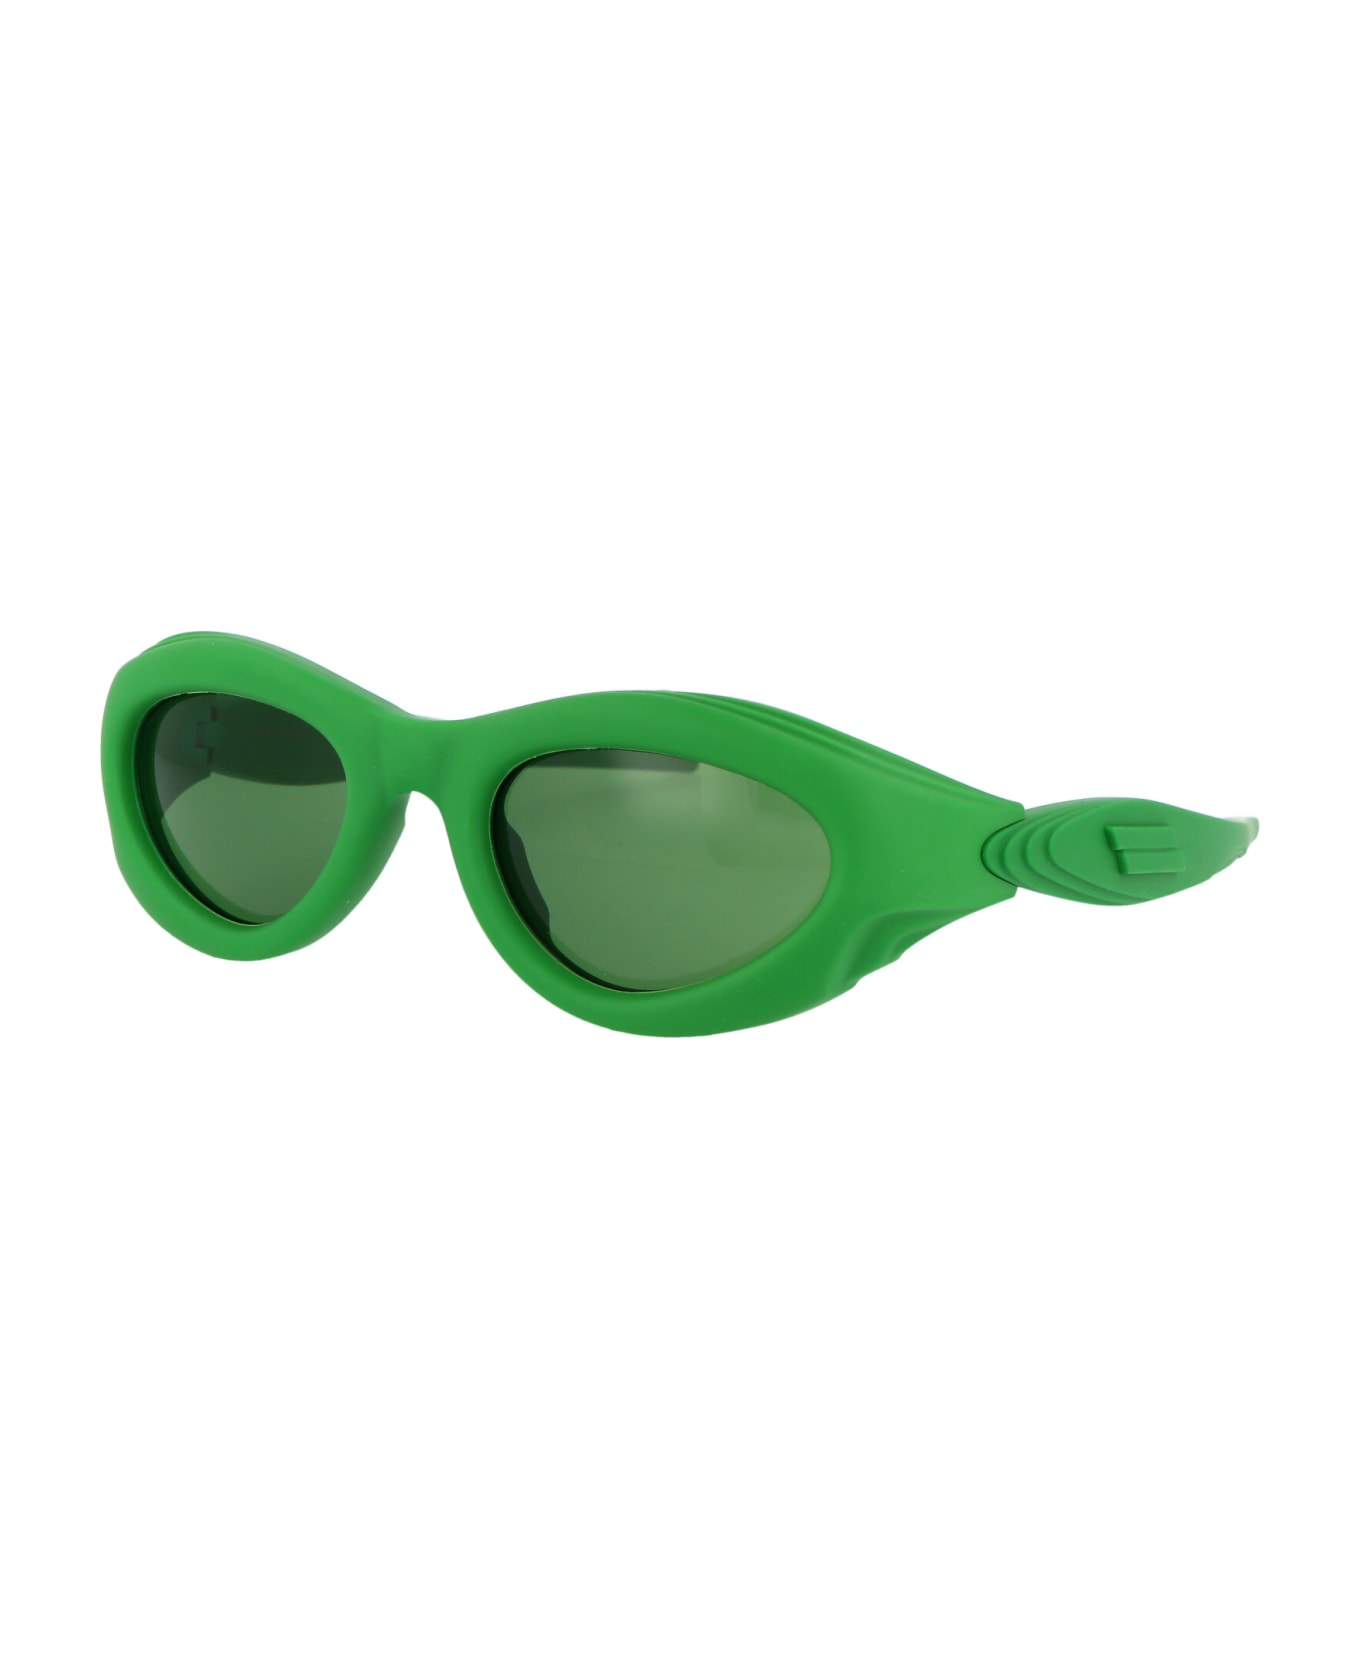 Bottega Veneta Eyewear Bv1162s Sunglasses - 002 GREEN GREEN GREEN